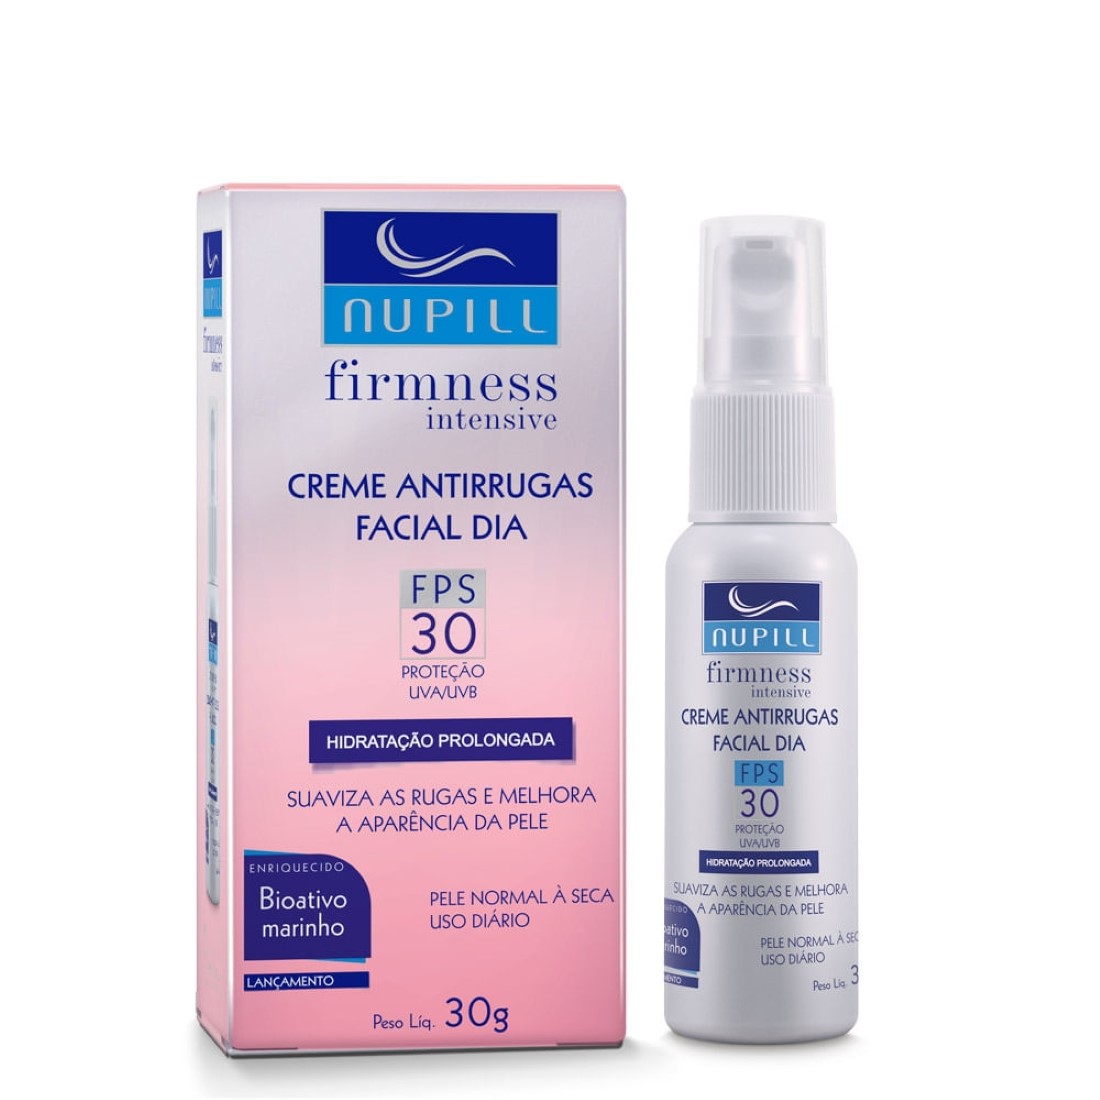 Creme Antirrugas Facial Dia FPS 30 Firmness Intensive 30g - Nupill